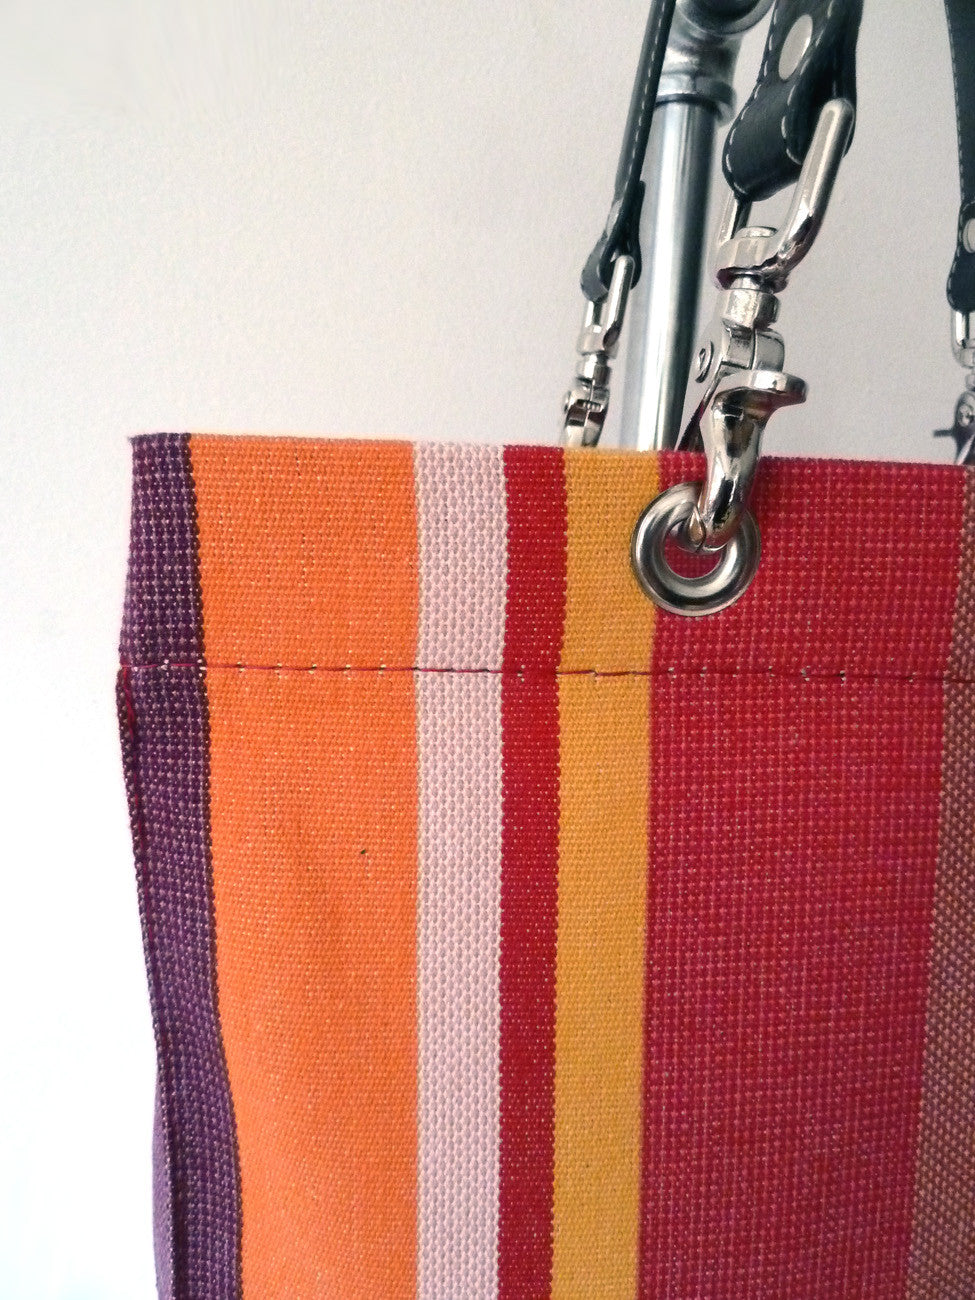 French Cotton Stripe Bags Aubergine Color Block